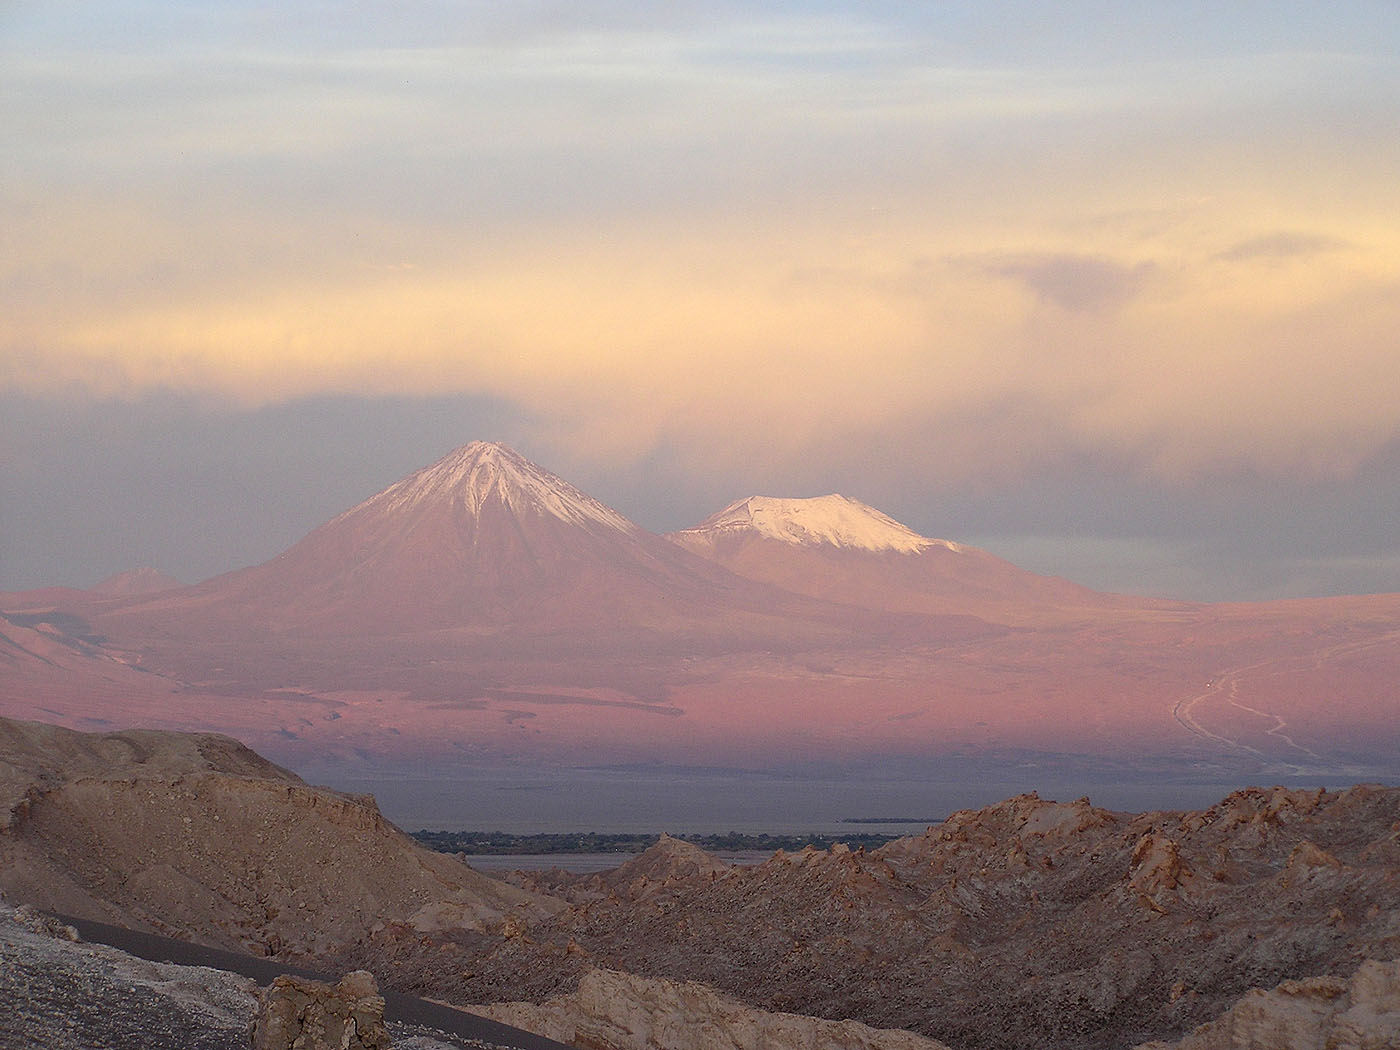 Valle de la Luna, San Pedro de Atacama, Chile